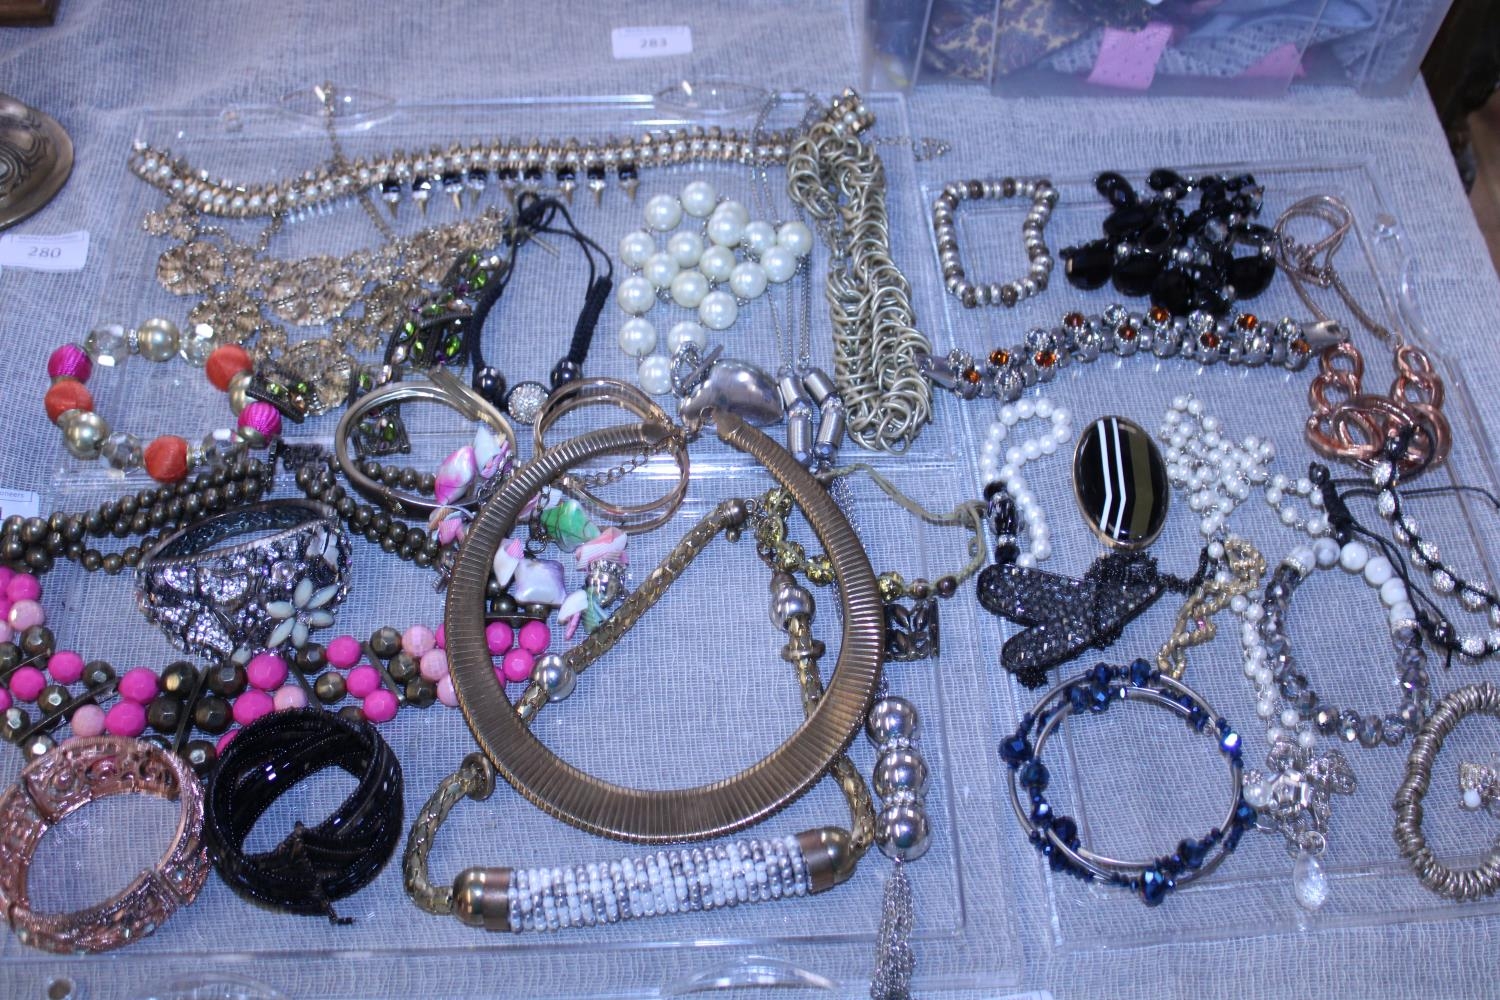 A job lot of costume jewellery